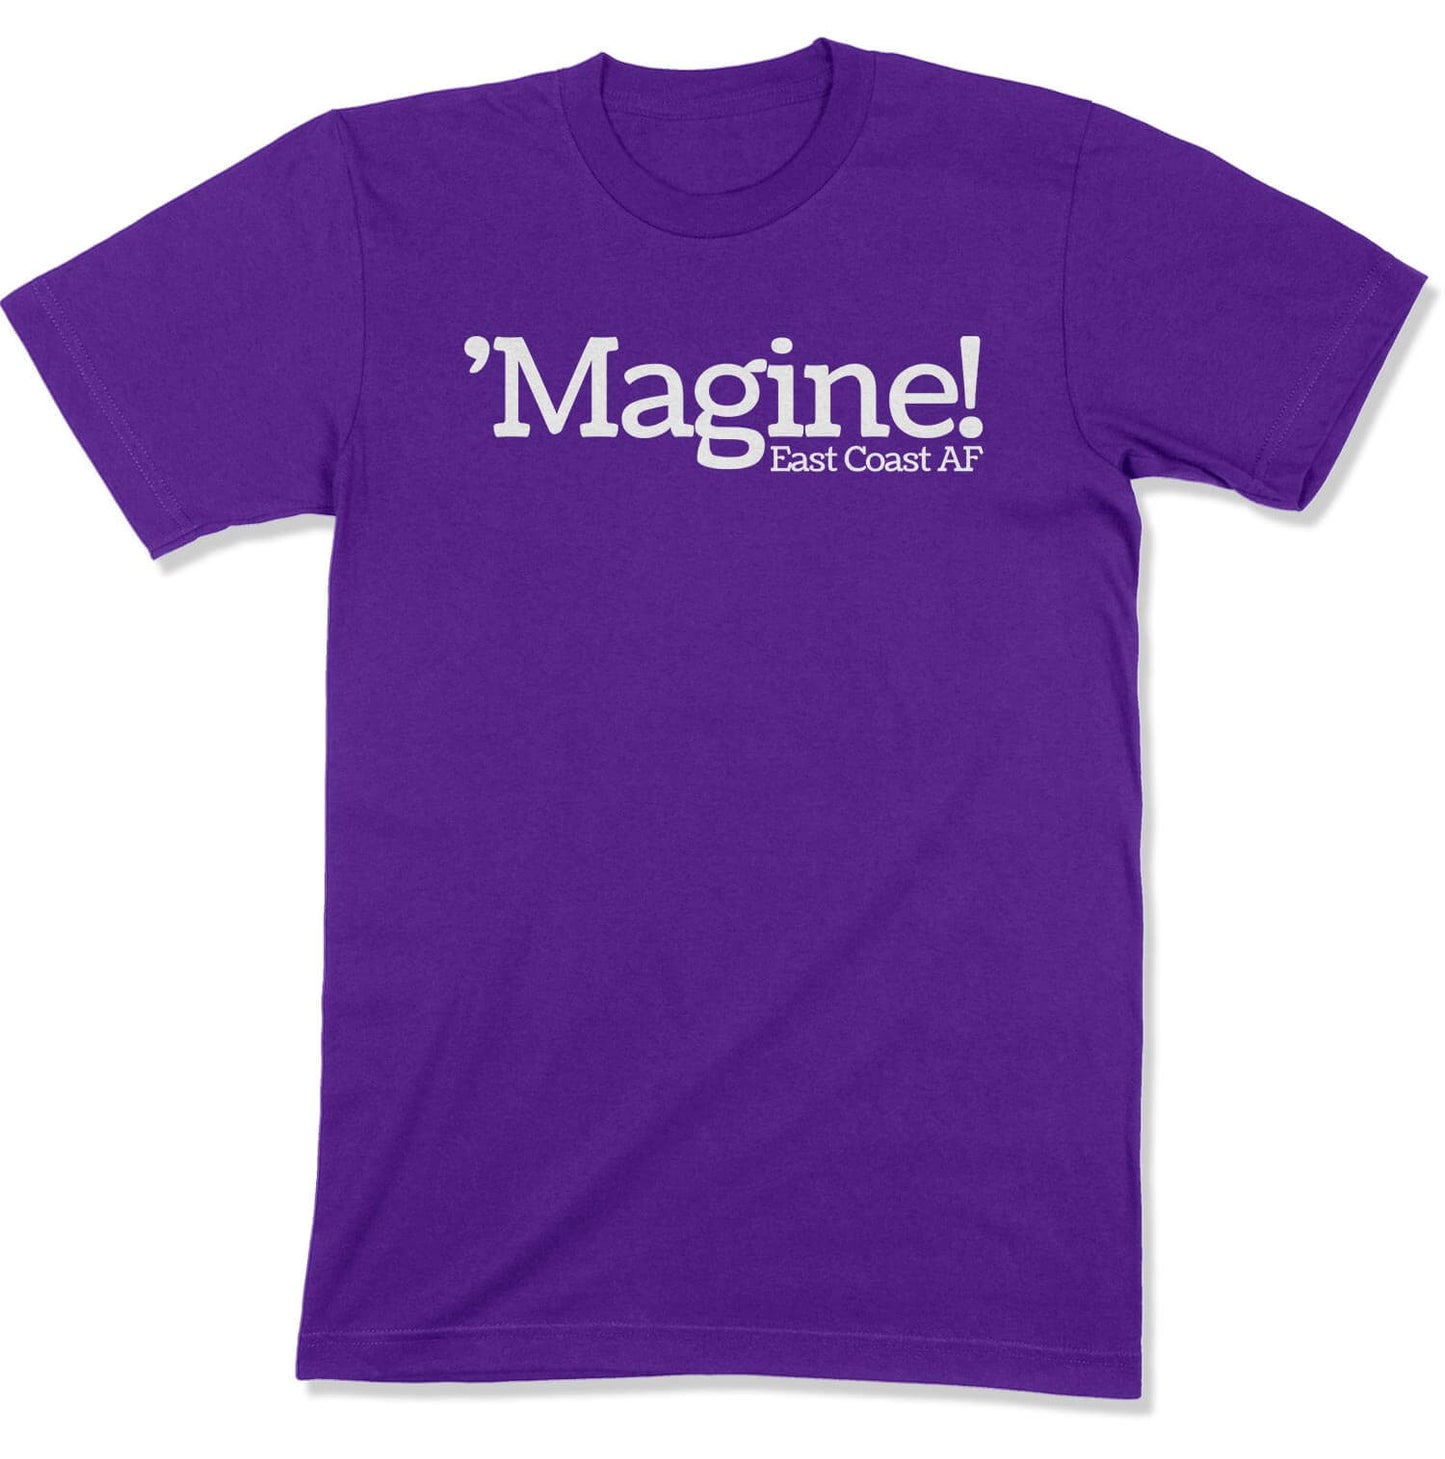 'Magine! Unisex T-Shirt in Color: Purple - East Coast AF Apparel